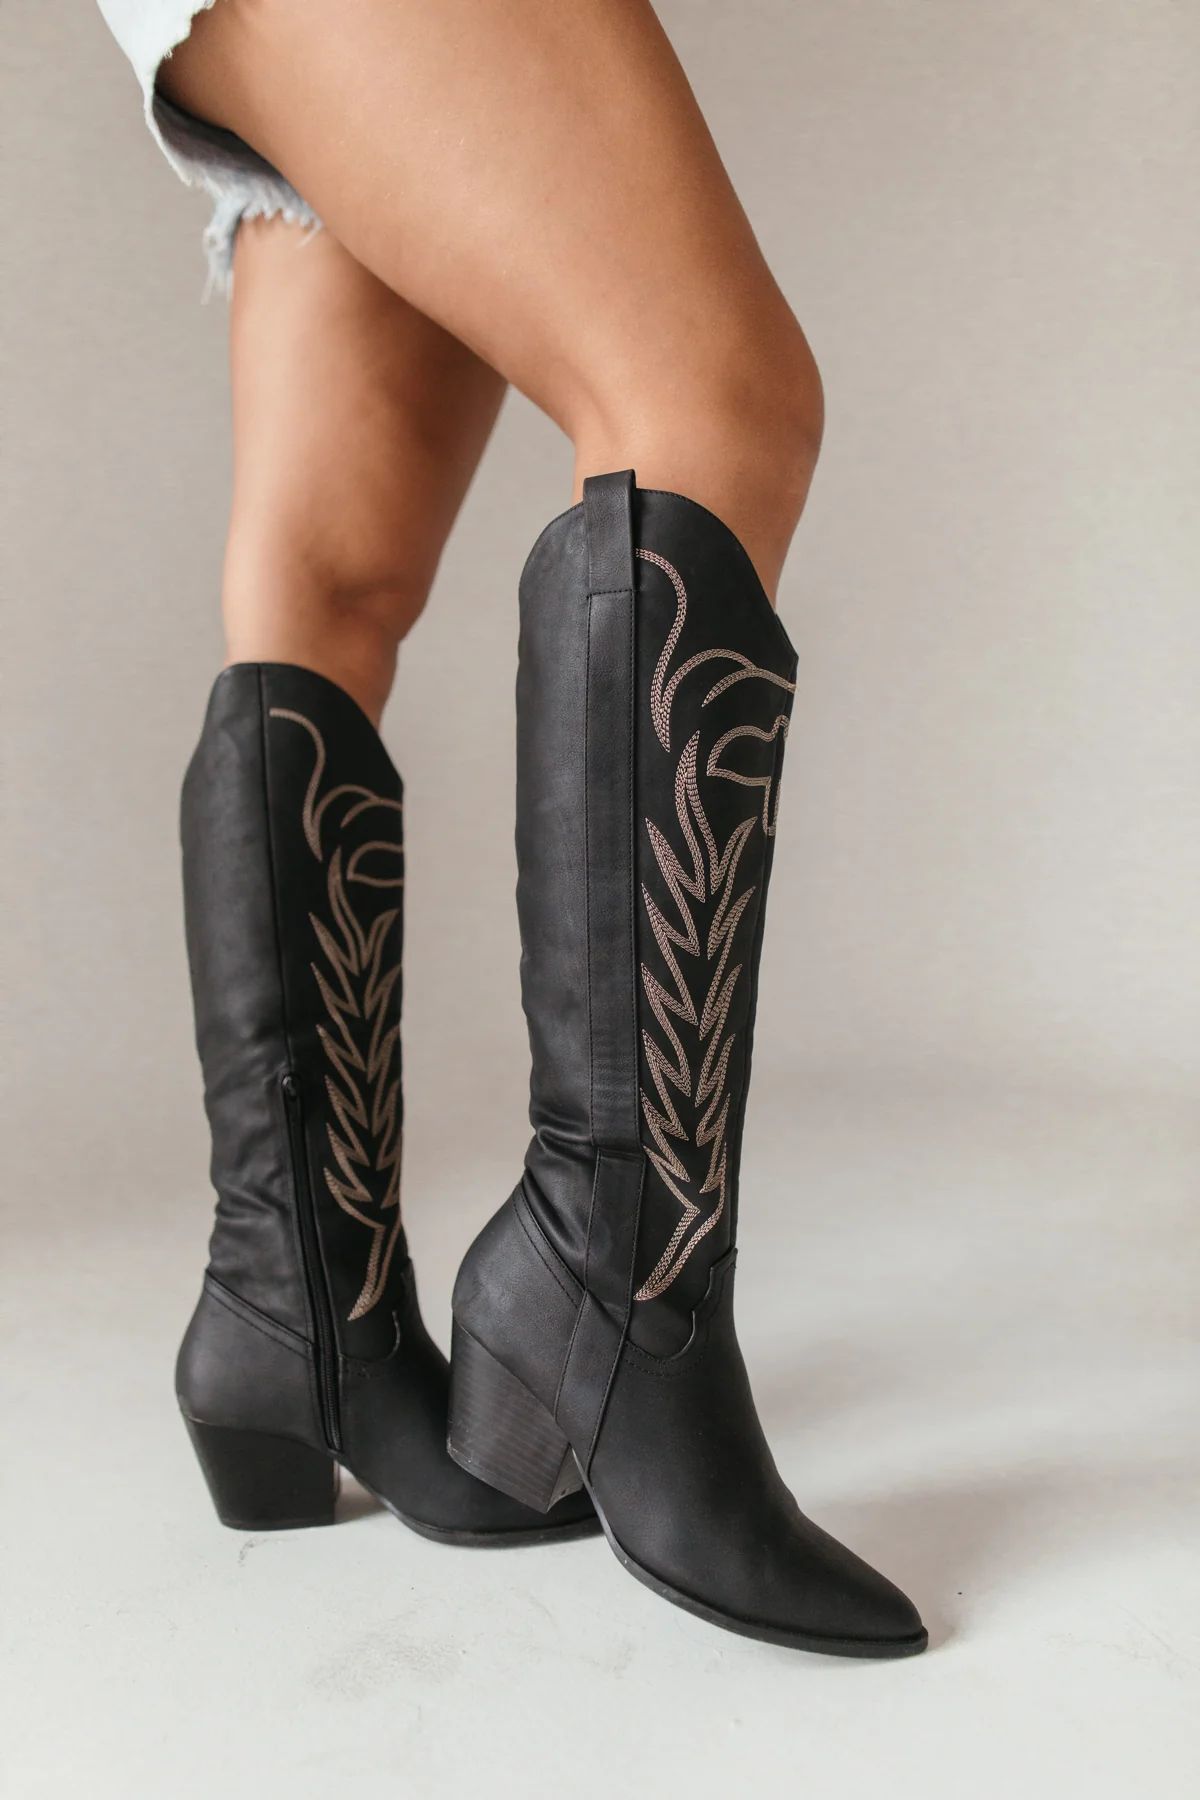 RESTOCK - Postie Western Black Boots | The Post